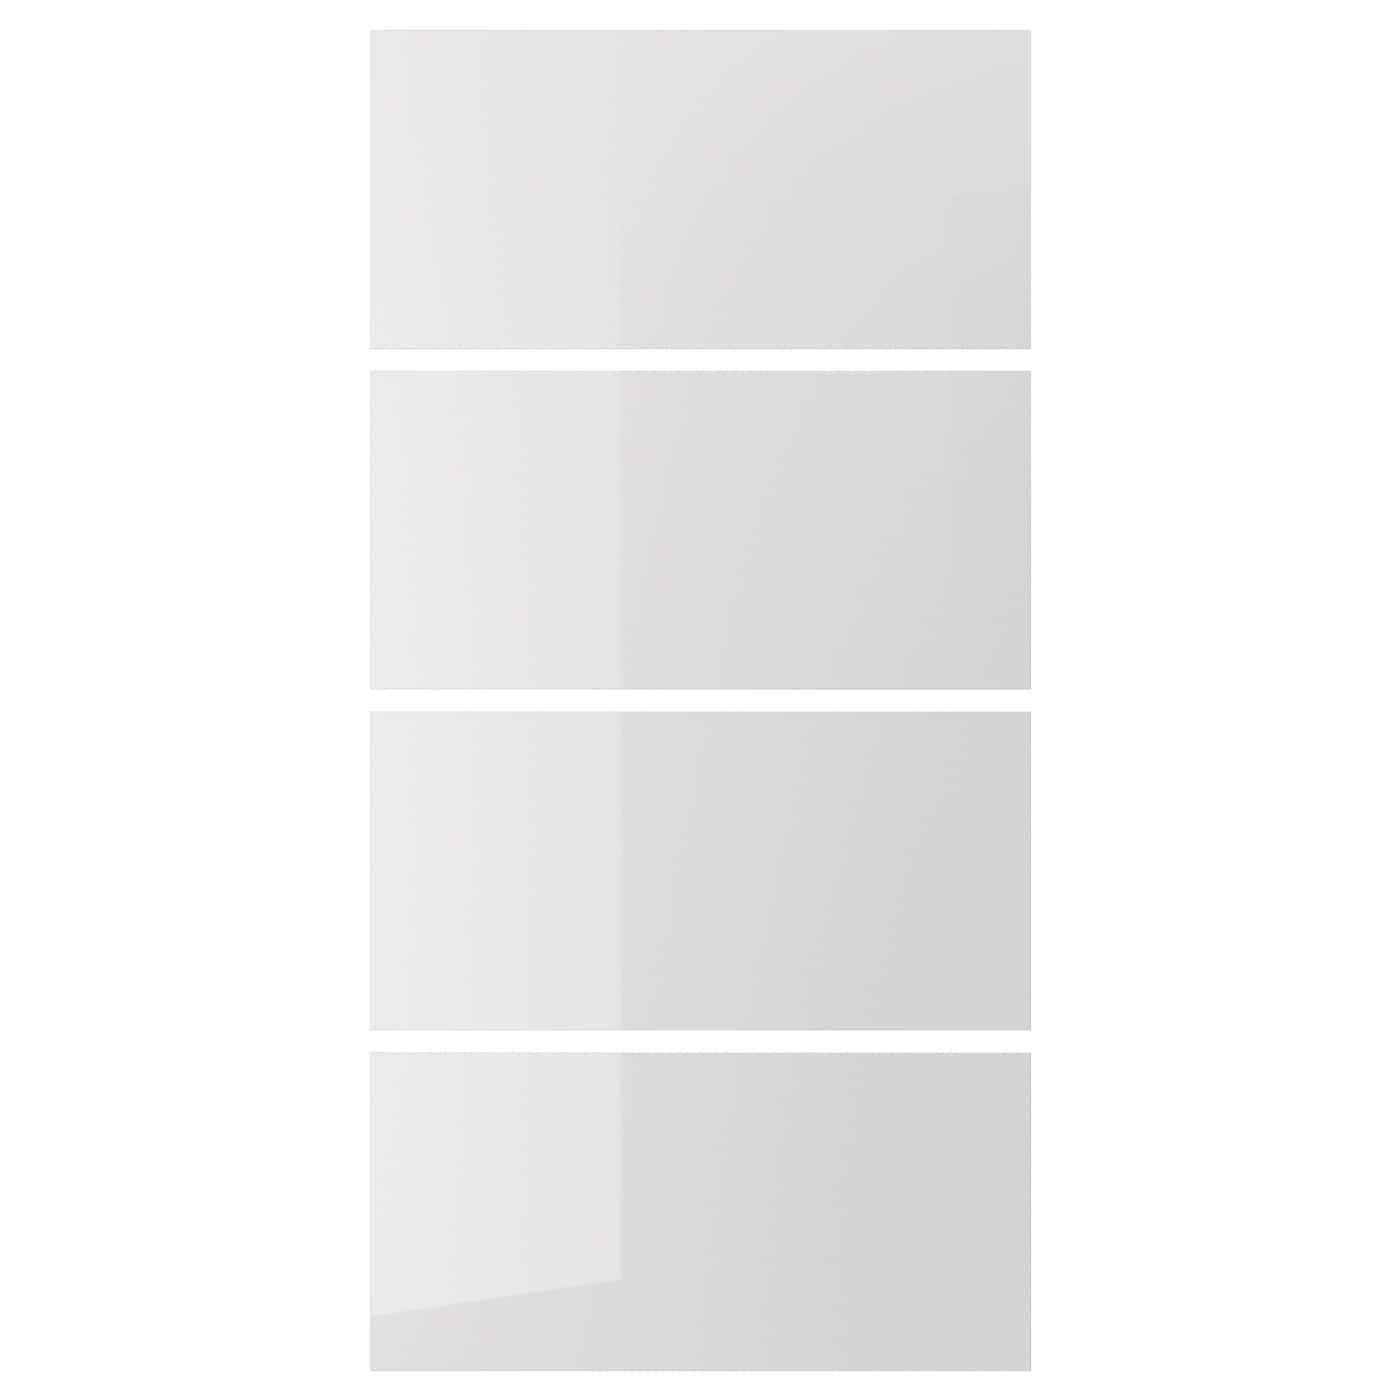 4 панели для коробки раздвижной двери - HOKKSUND IKEA/ ХОККСУНД ИКЕА,  201х100 см, серый